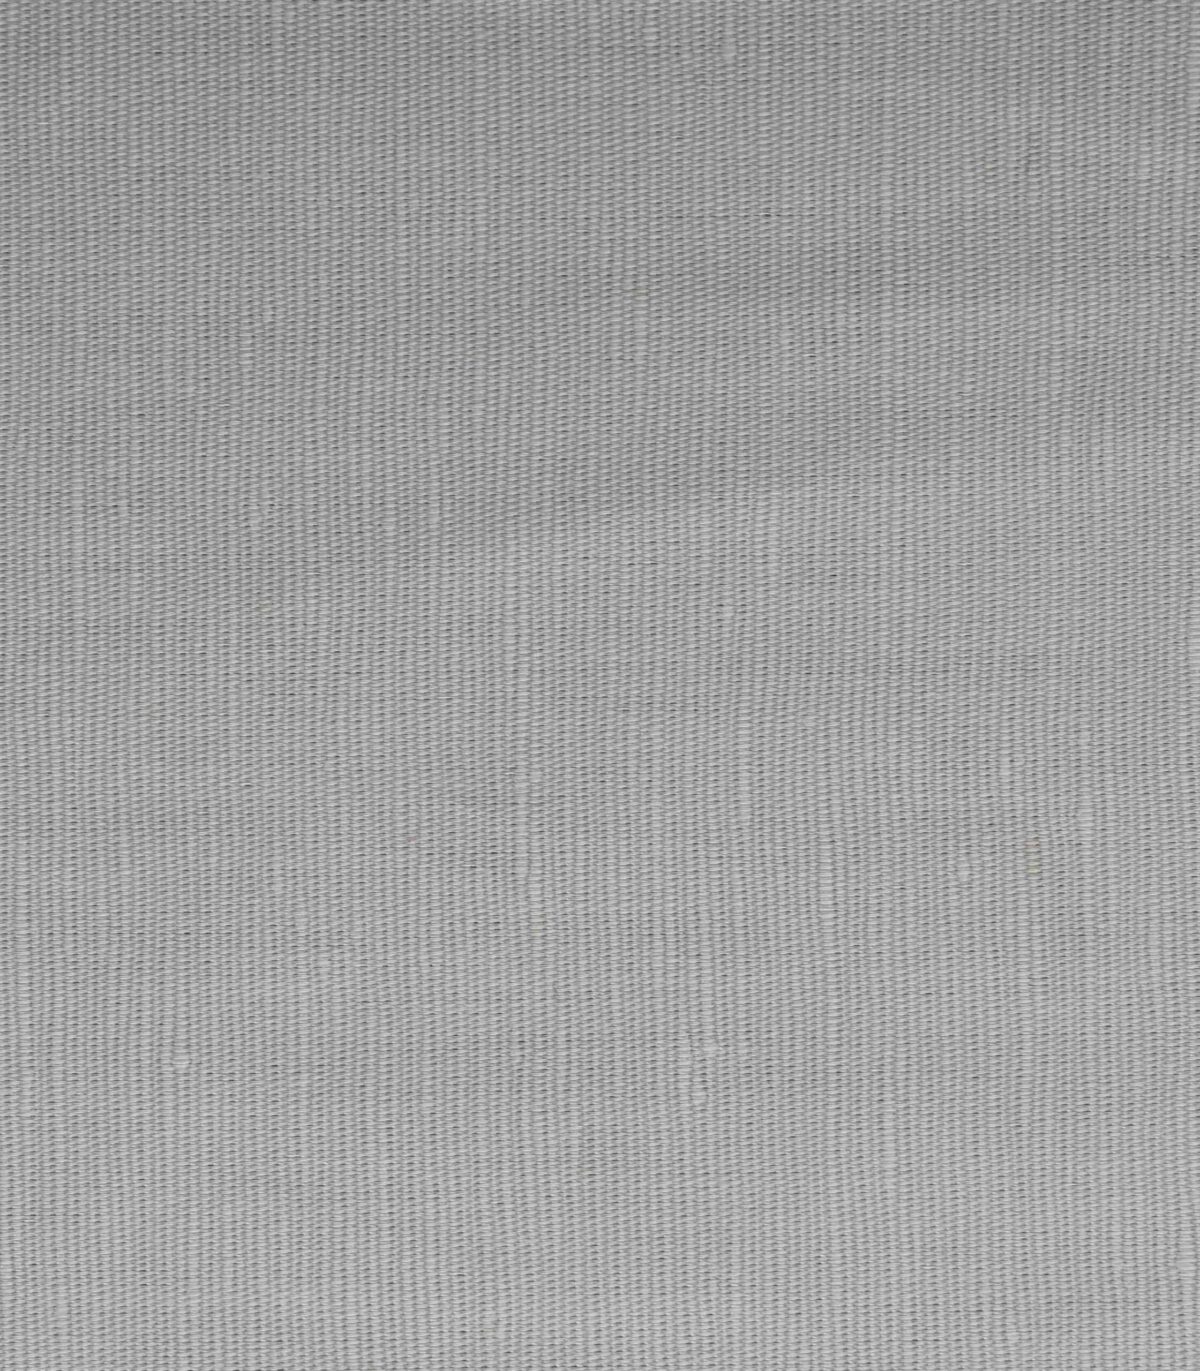 Warp Oxford Cotton Linen Material RFD Fabric